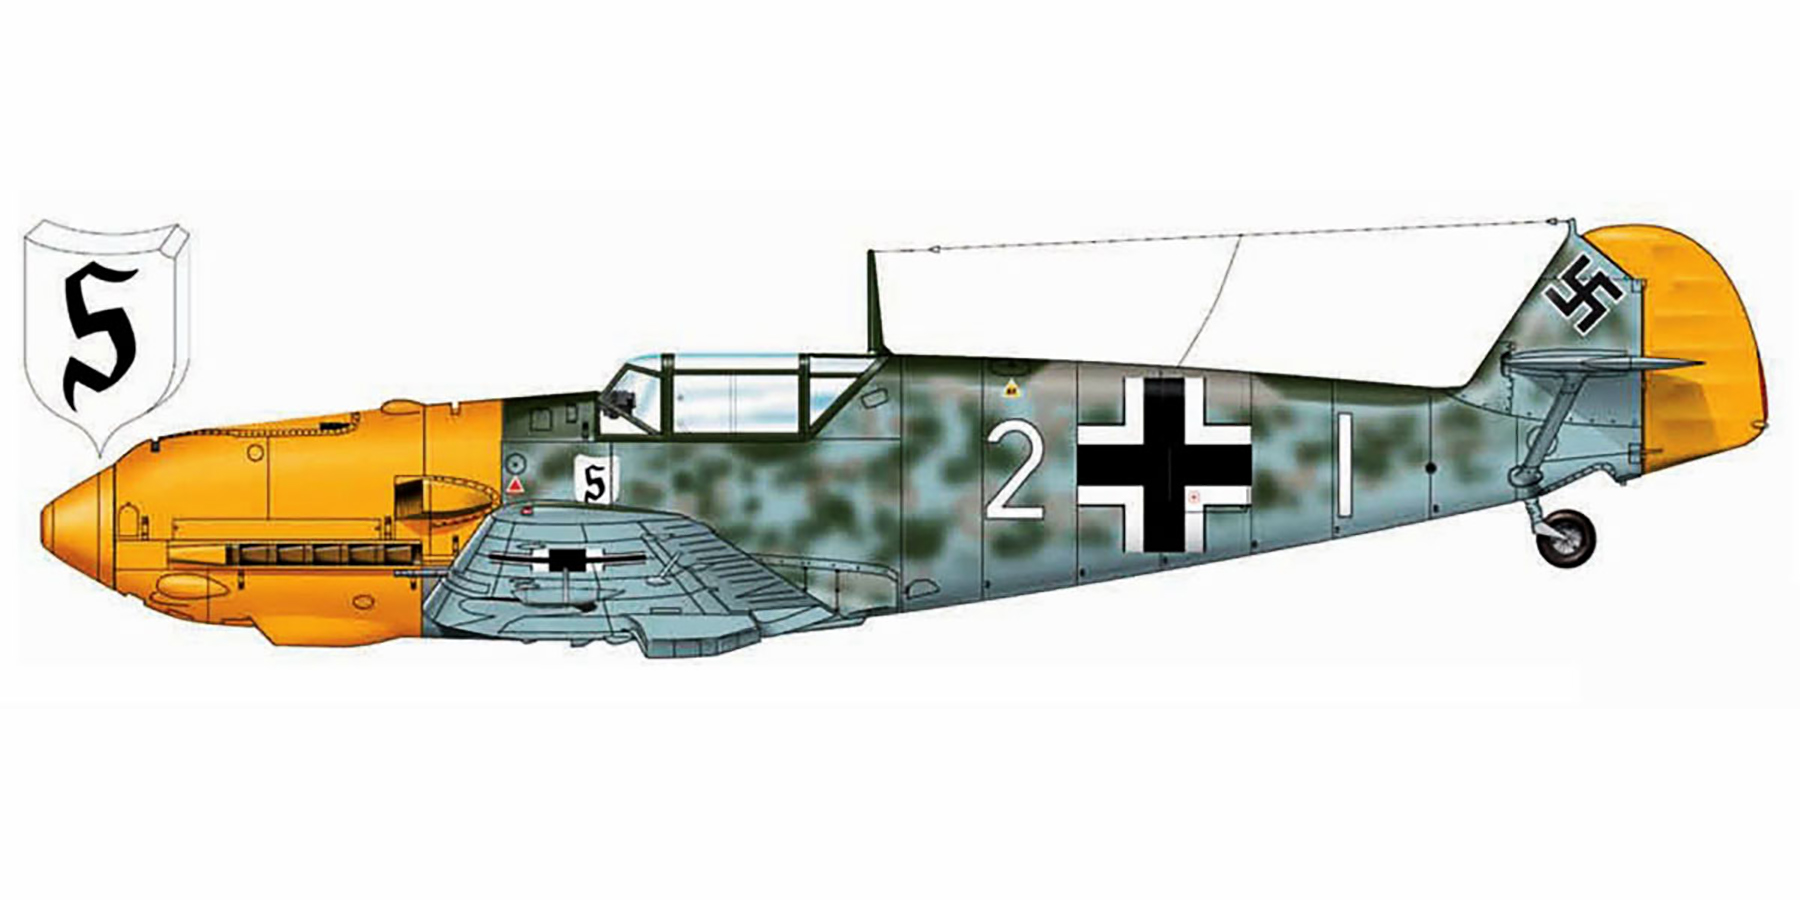 Messerschmitt Bf 109E1 7.JG26 White 2 Karl Heinz Bock WNr 6294 crash landed Rye 17th Sep 1940 0B